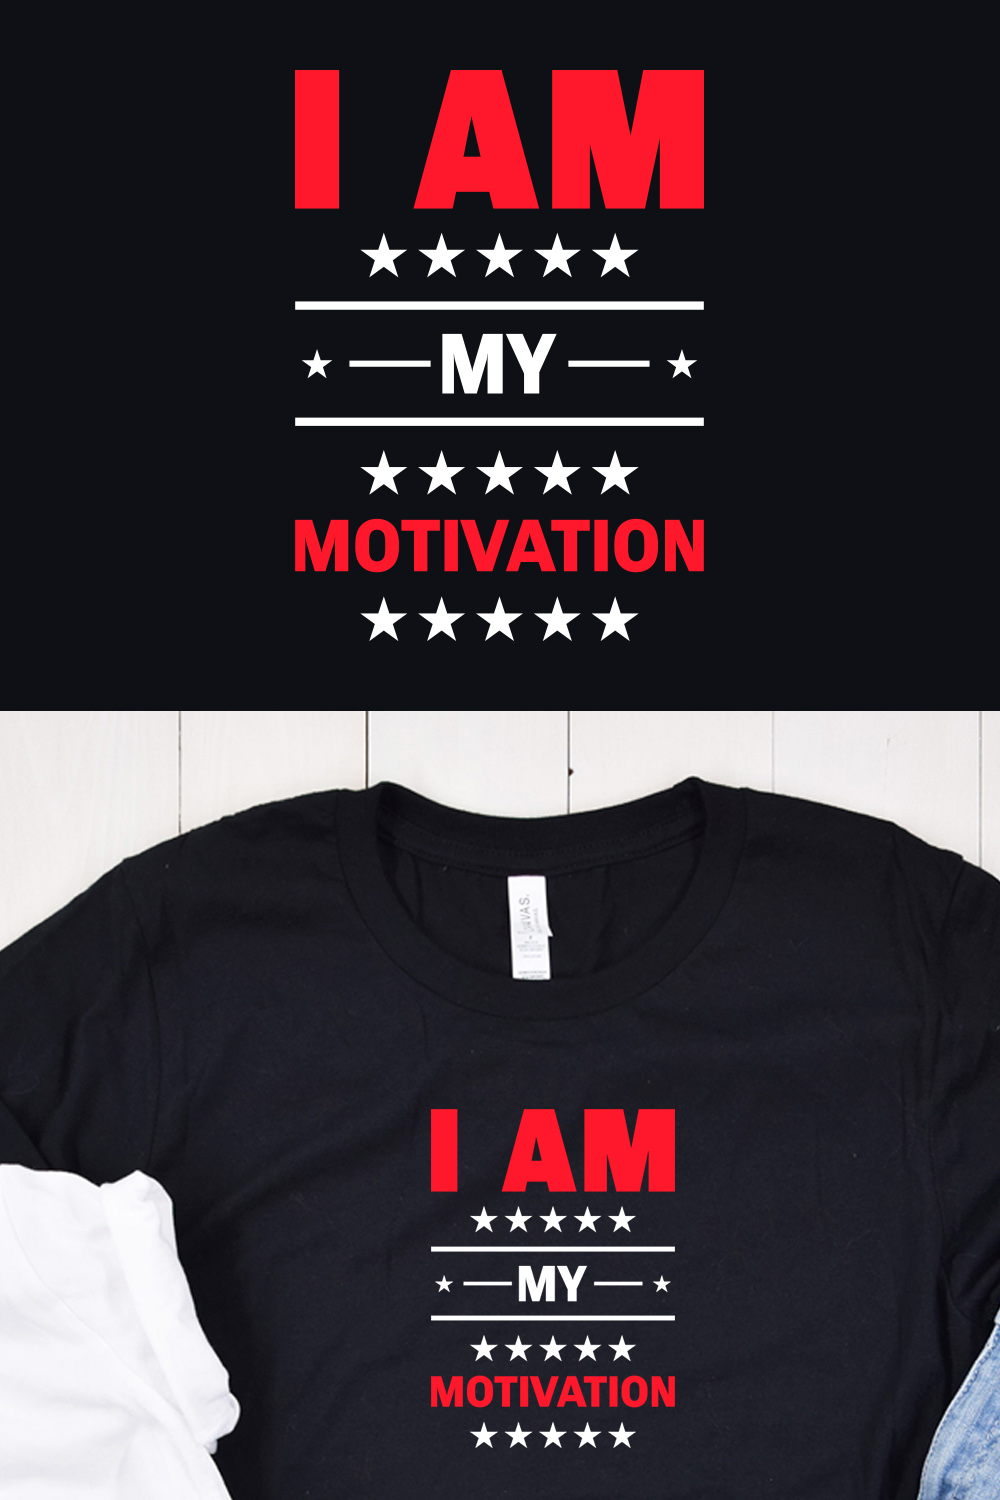 I am My Motivation Typography T-Shirt Design Pinterest Collage image.